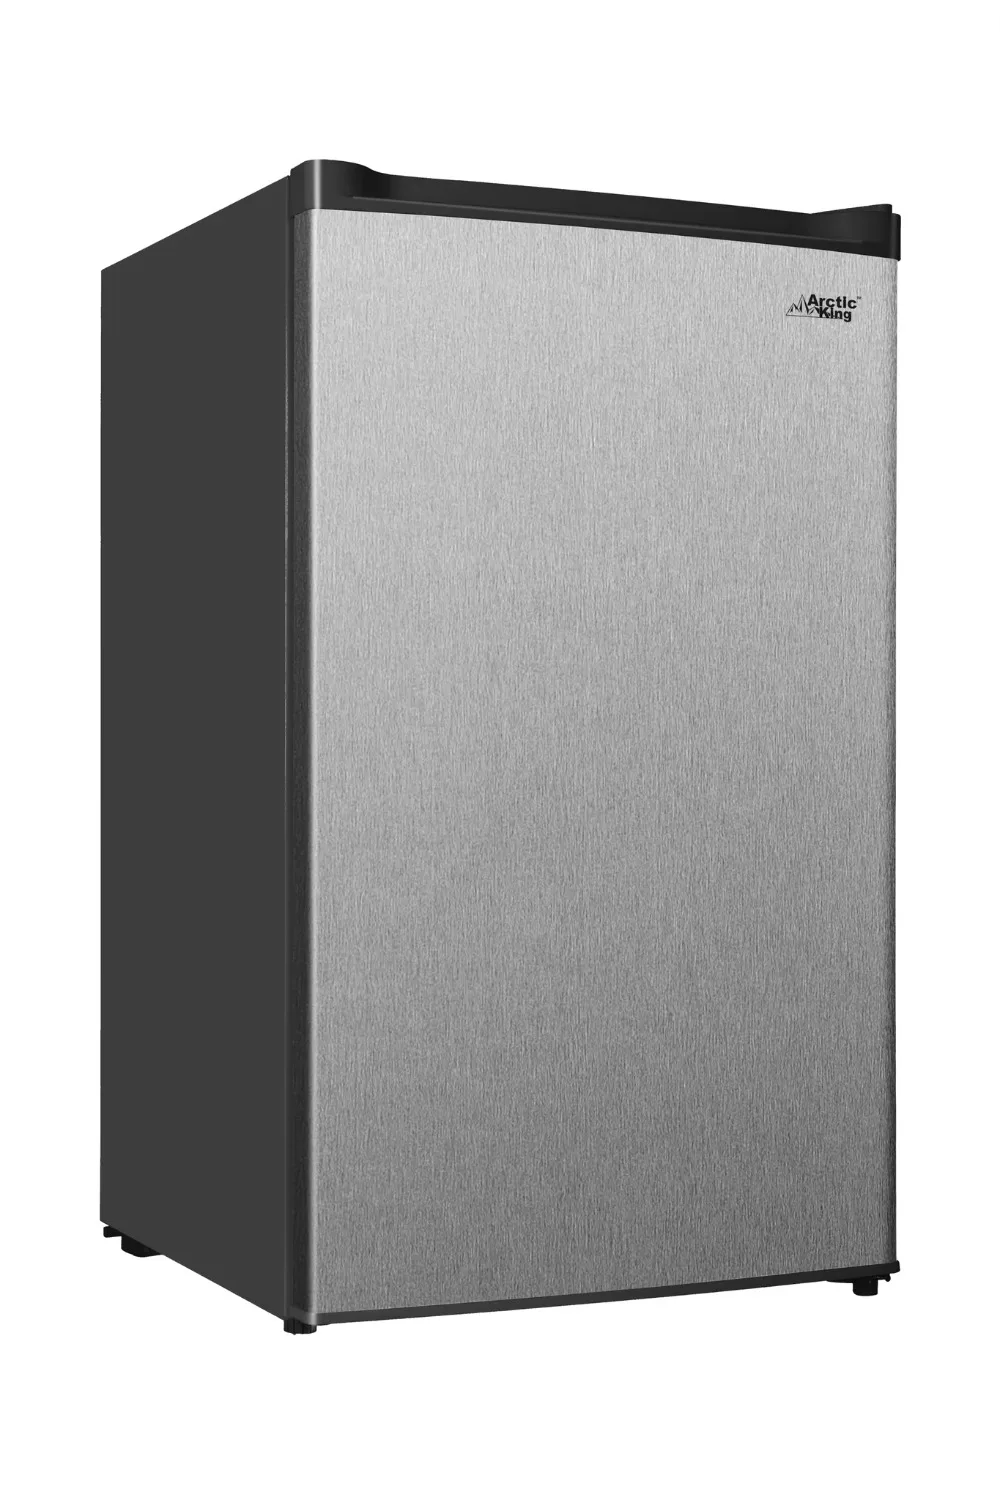 

Upright Freezer, Refrigerator, Stainless Steel, E-Star, 3.0 Cu.ft. fridge